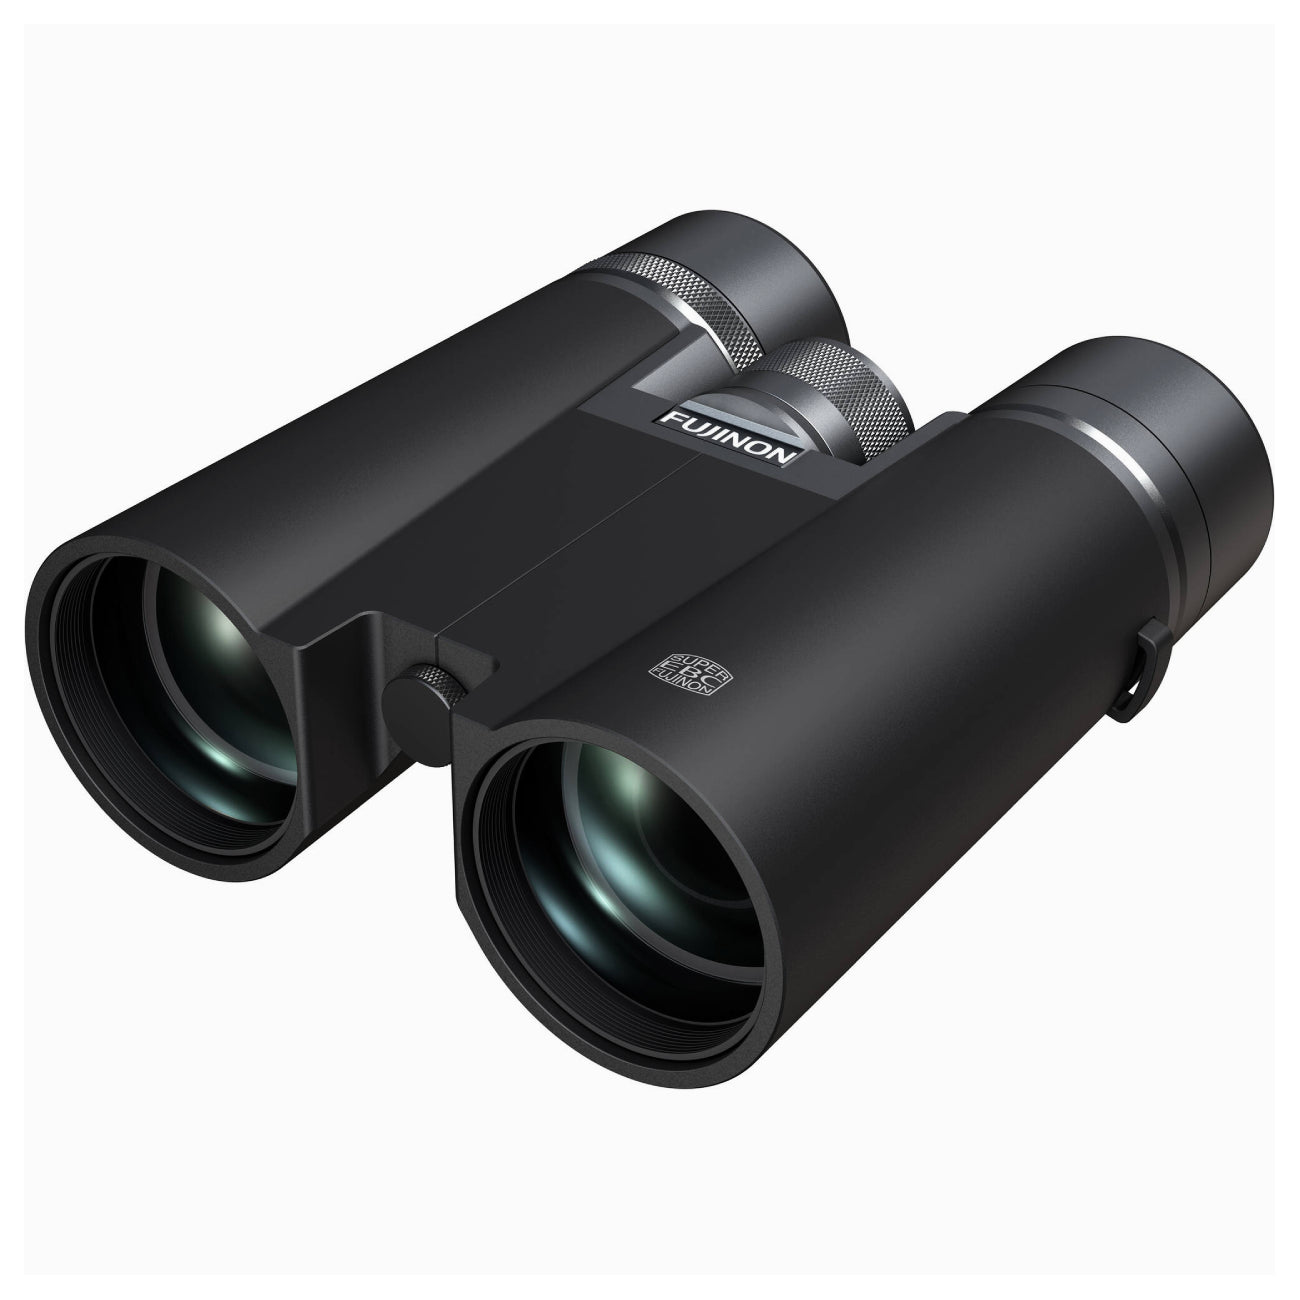 Fujinon 8x42 Hyper Clarity Binoculars / binoculars for sale, best binoculars, best binoculars 2022